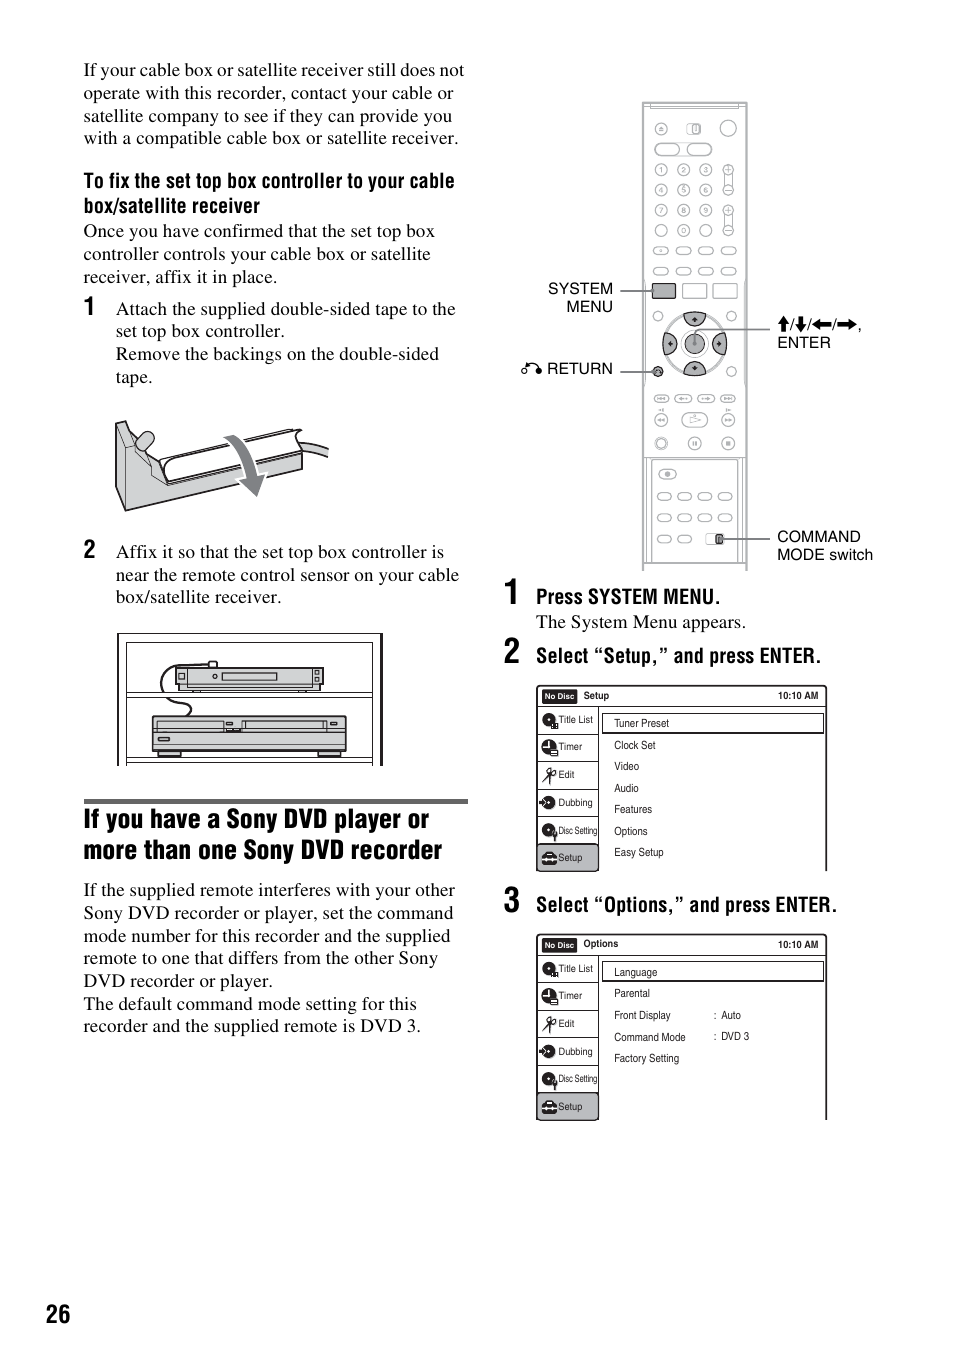 Press system menu, Select “setup,” and press enter, Select “options,” and press enter | The system menu appears | Sony RDR-VX521 User Manual | Page 26 / 132